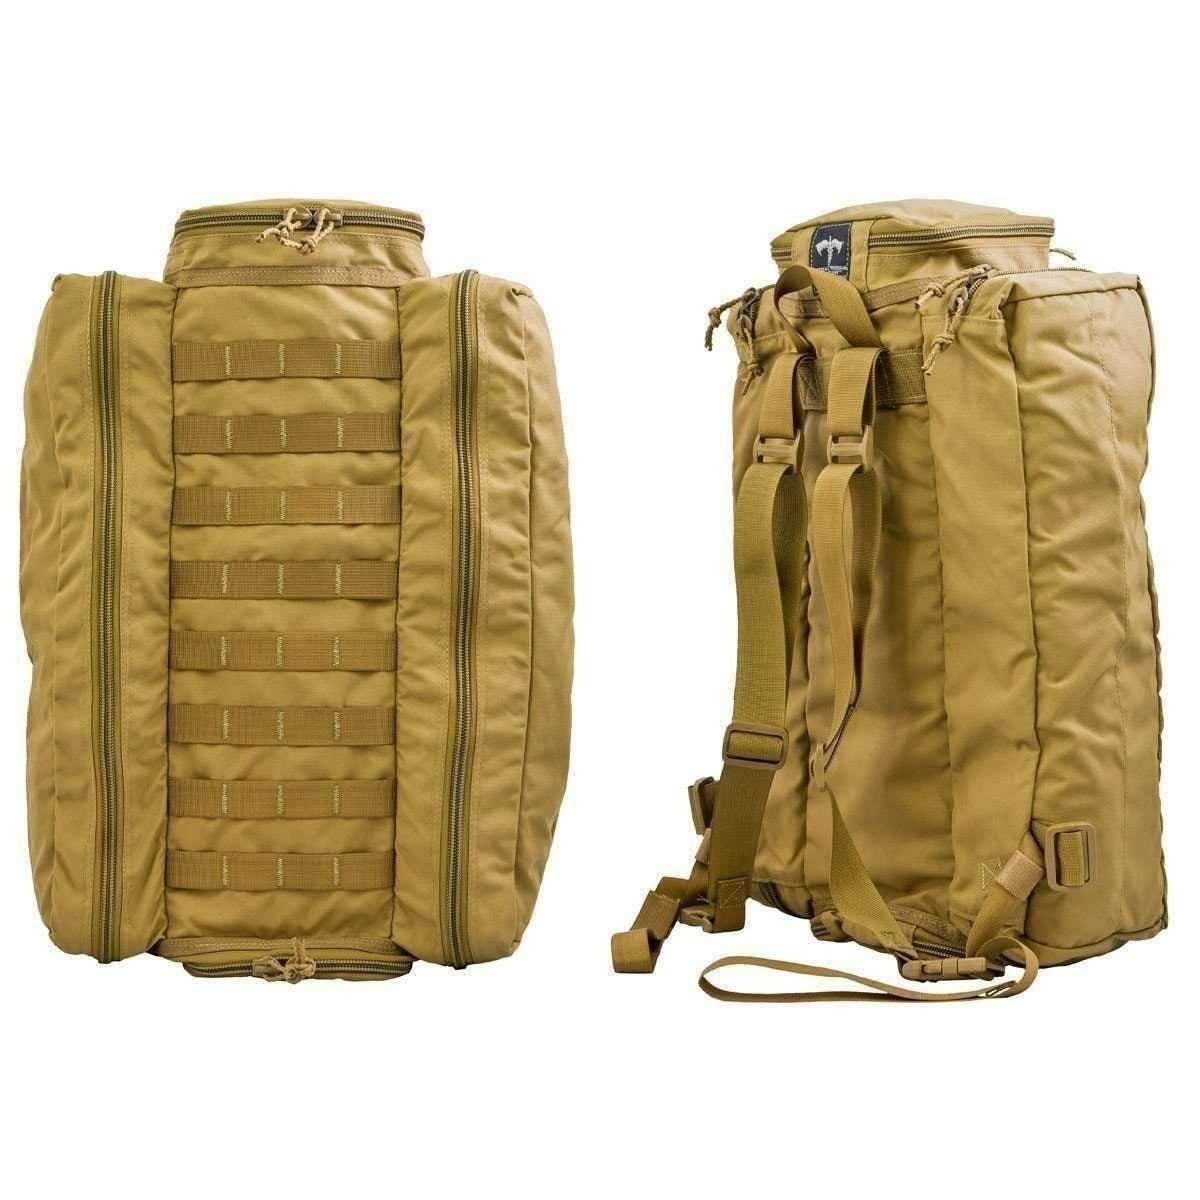 TacMed™ ARK Active Shooter Response Bag - Vendor